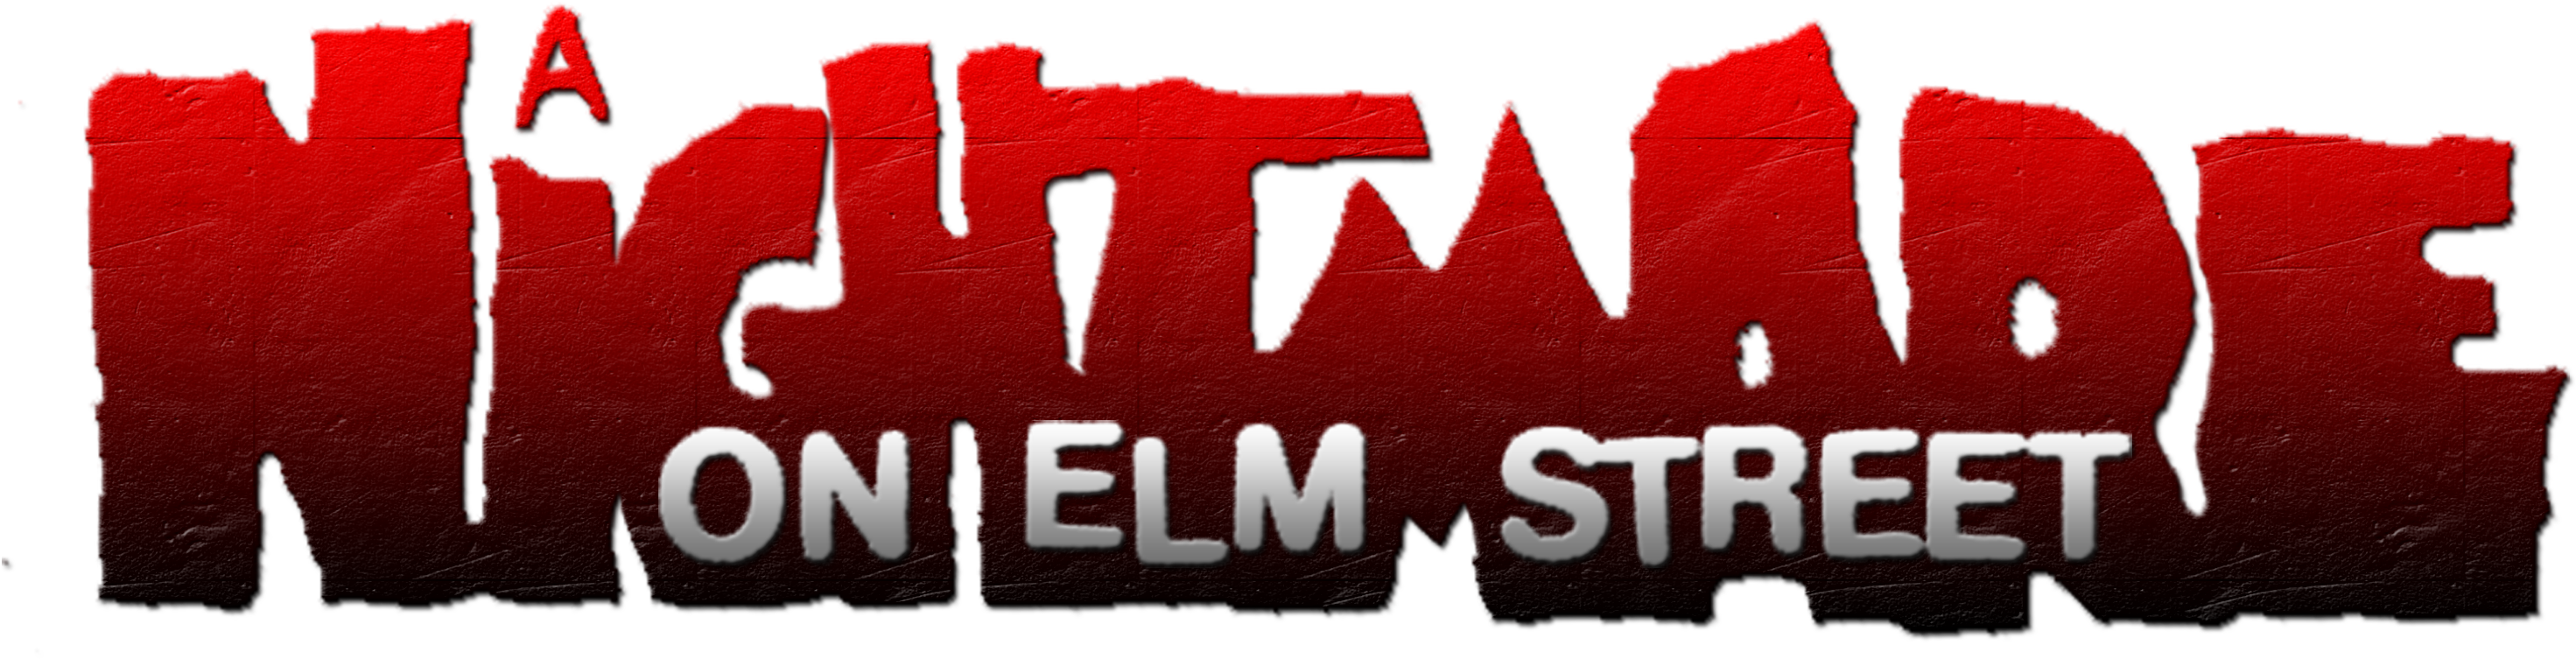 Download 3000 X 3000 22 - Nightmare On Elm Street Franchise Poster Png Imag...